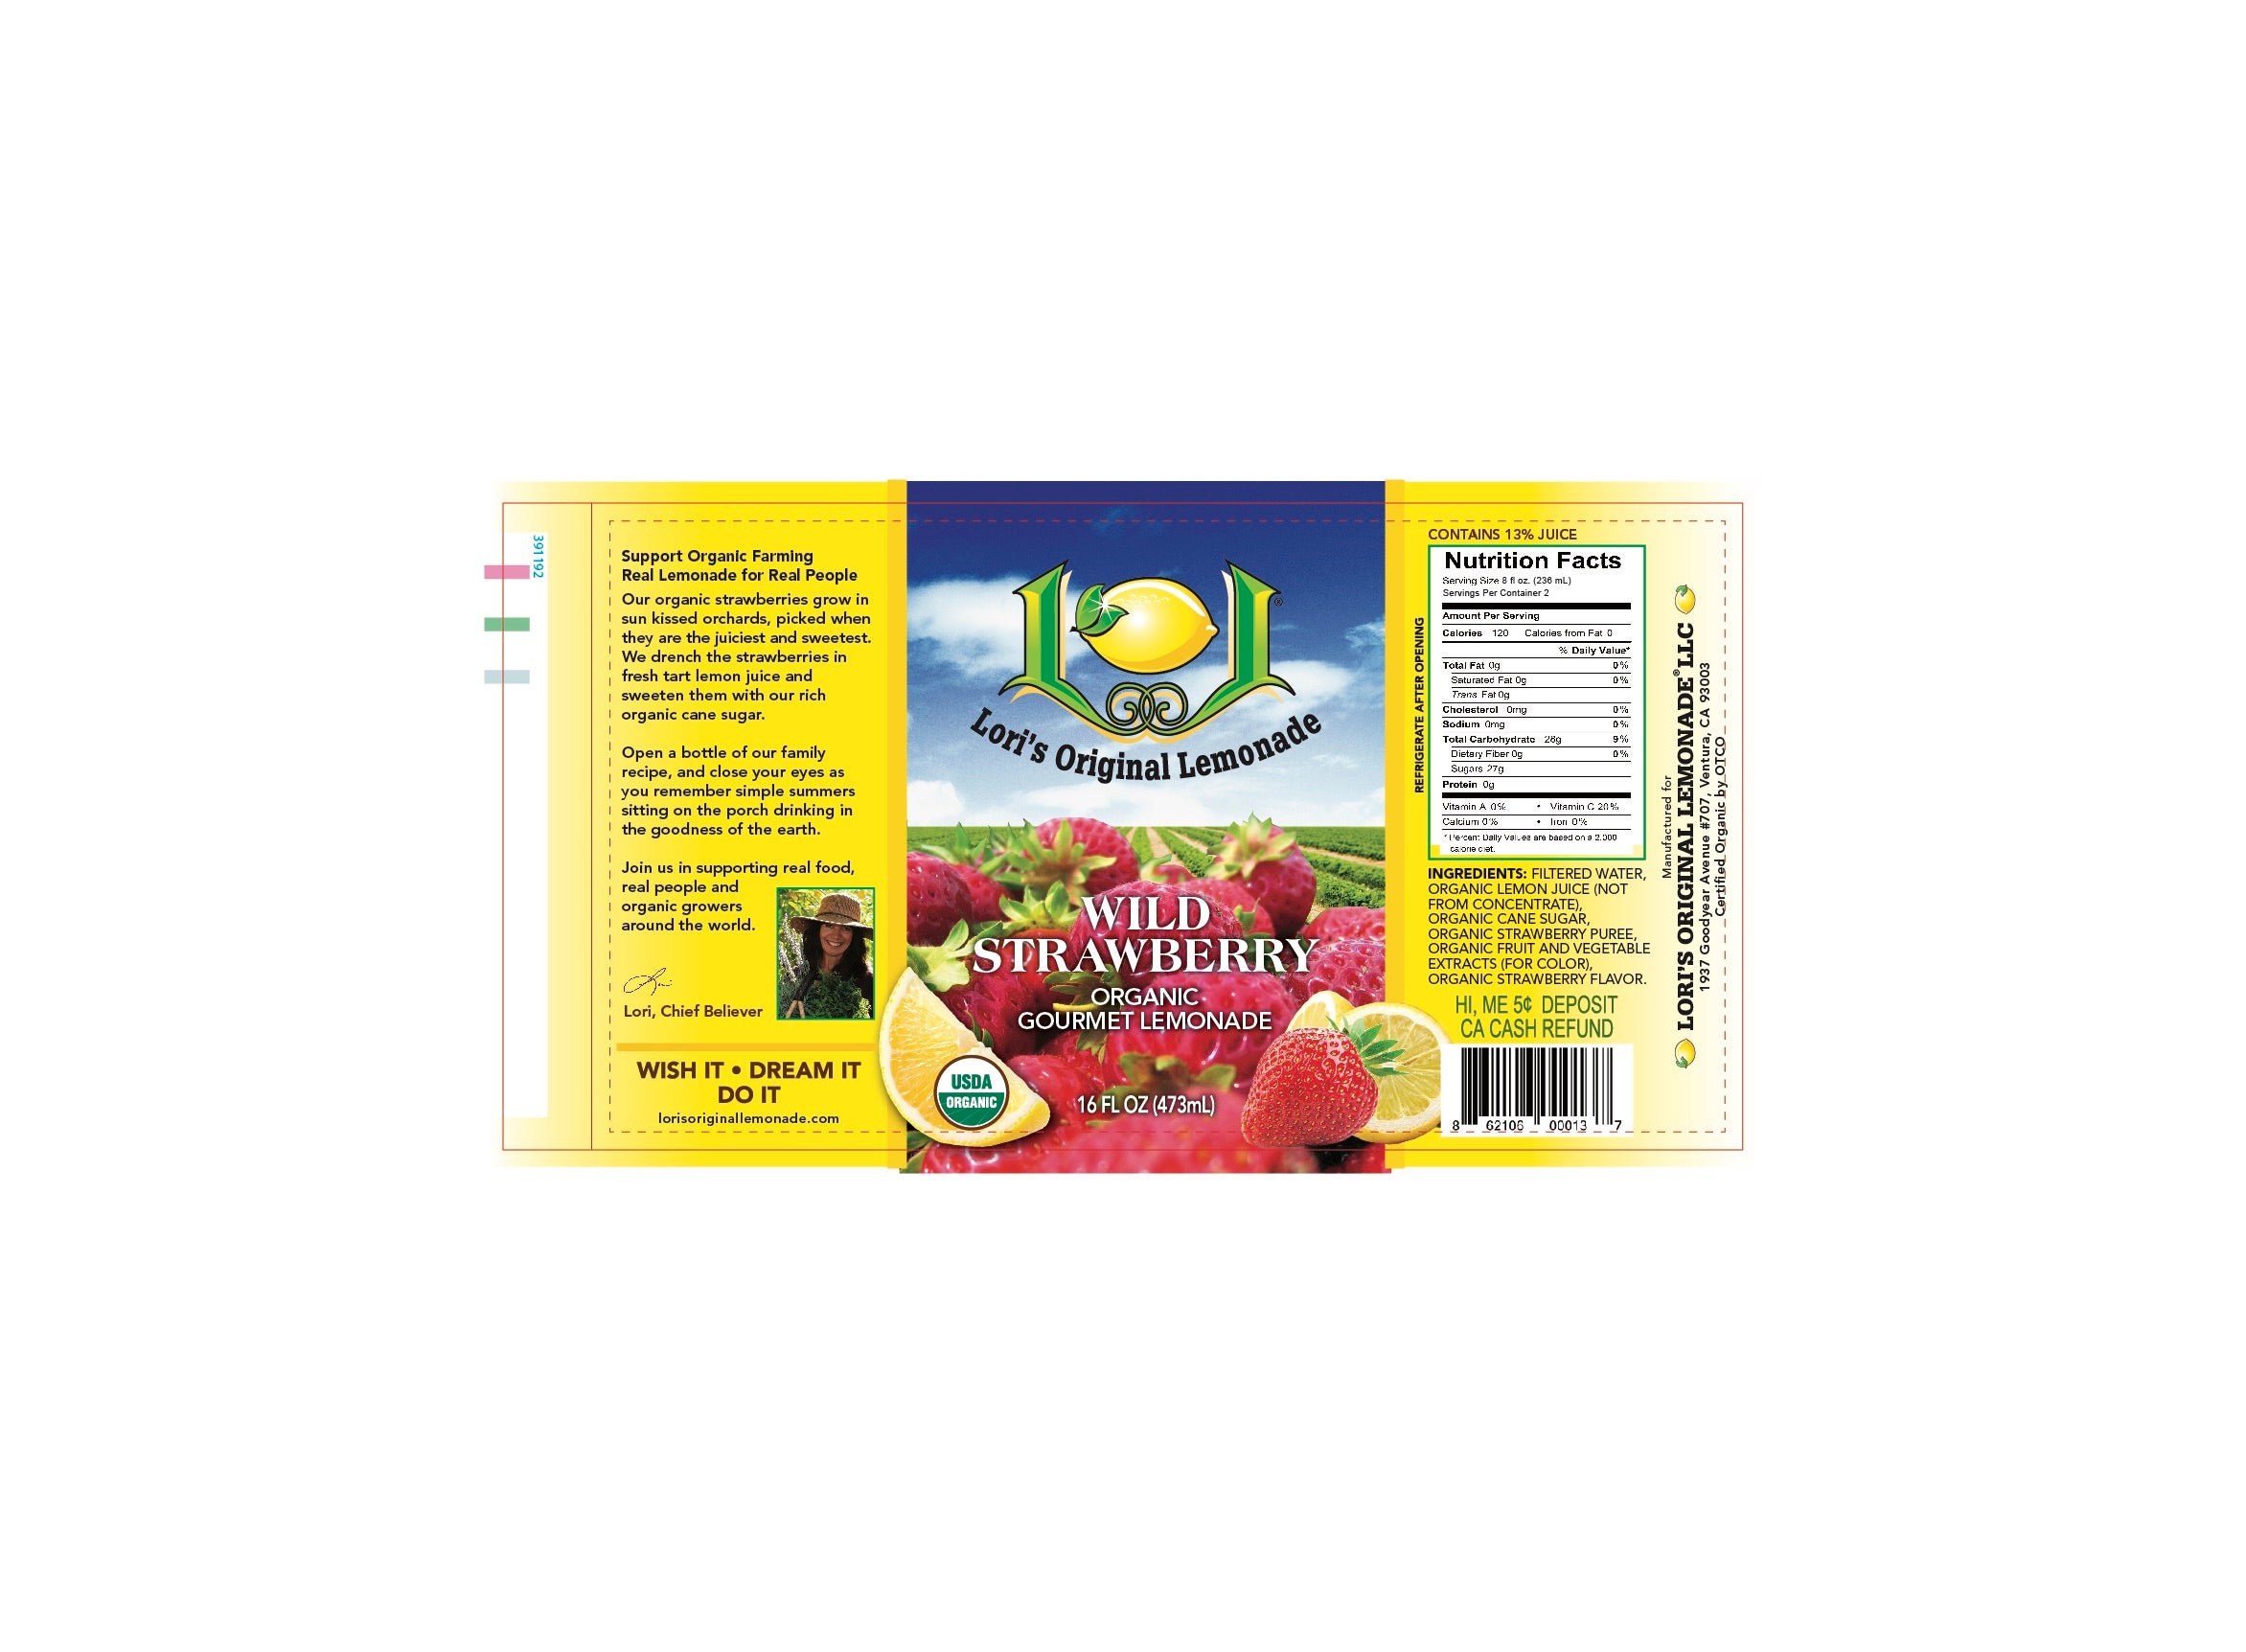 Organic Wild Strawberry Lemonade - Lori’s Original Lemonade